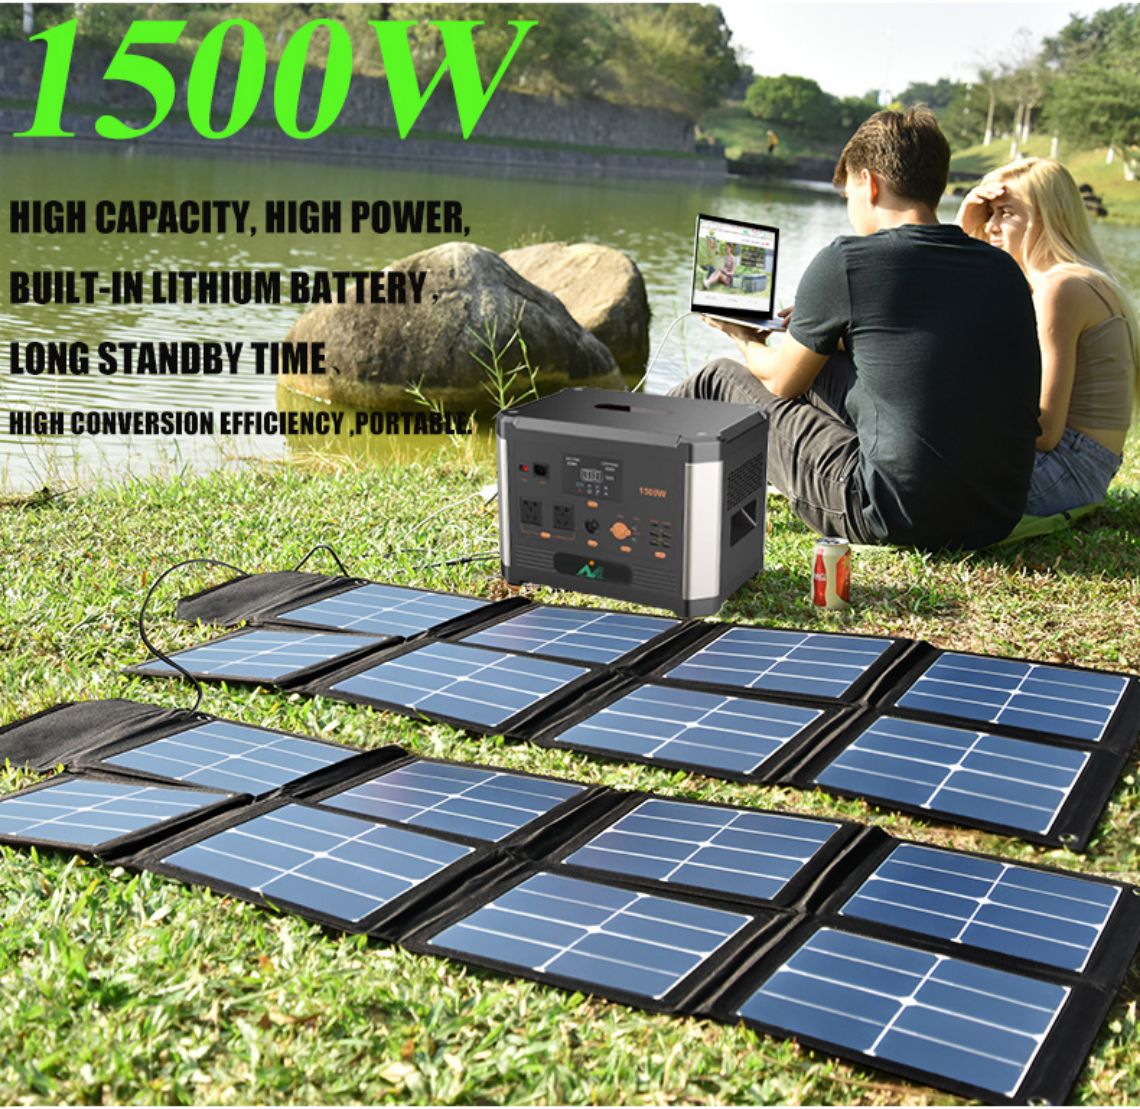 Portable lithium outdoor mobile power supply Portable Generator